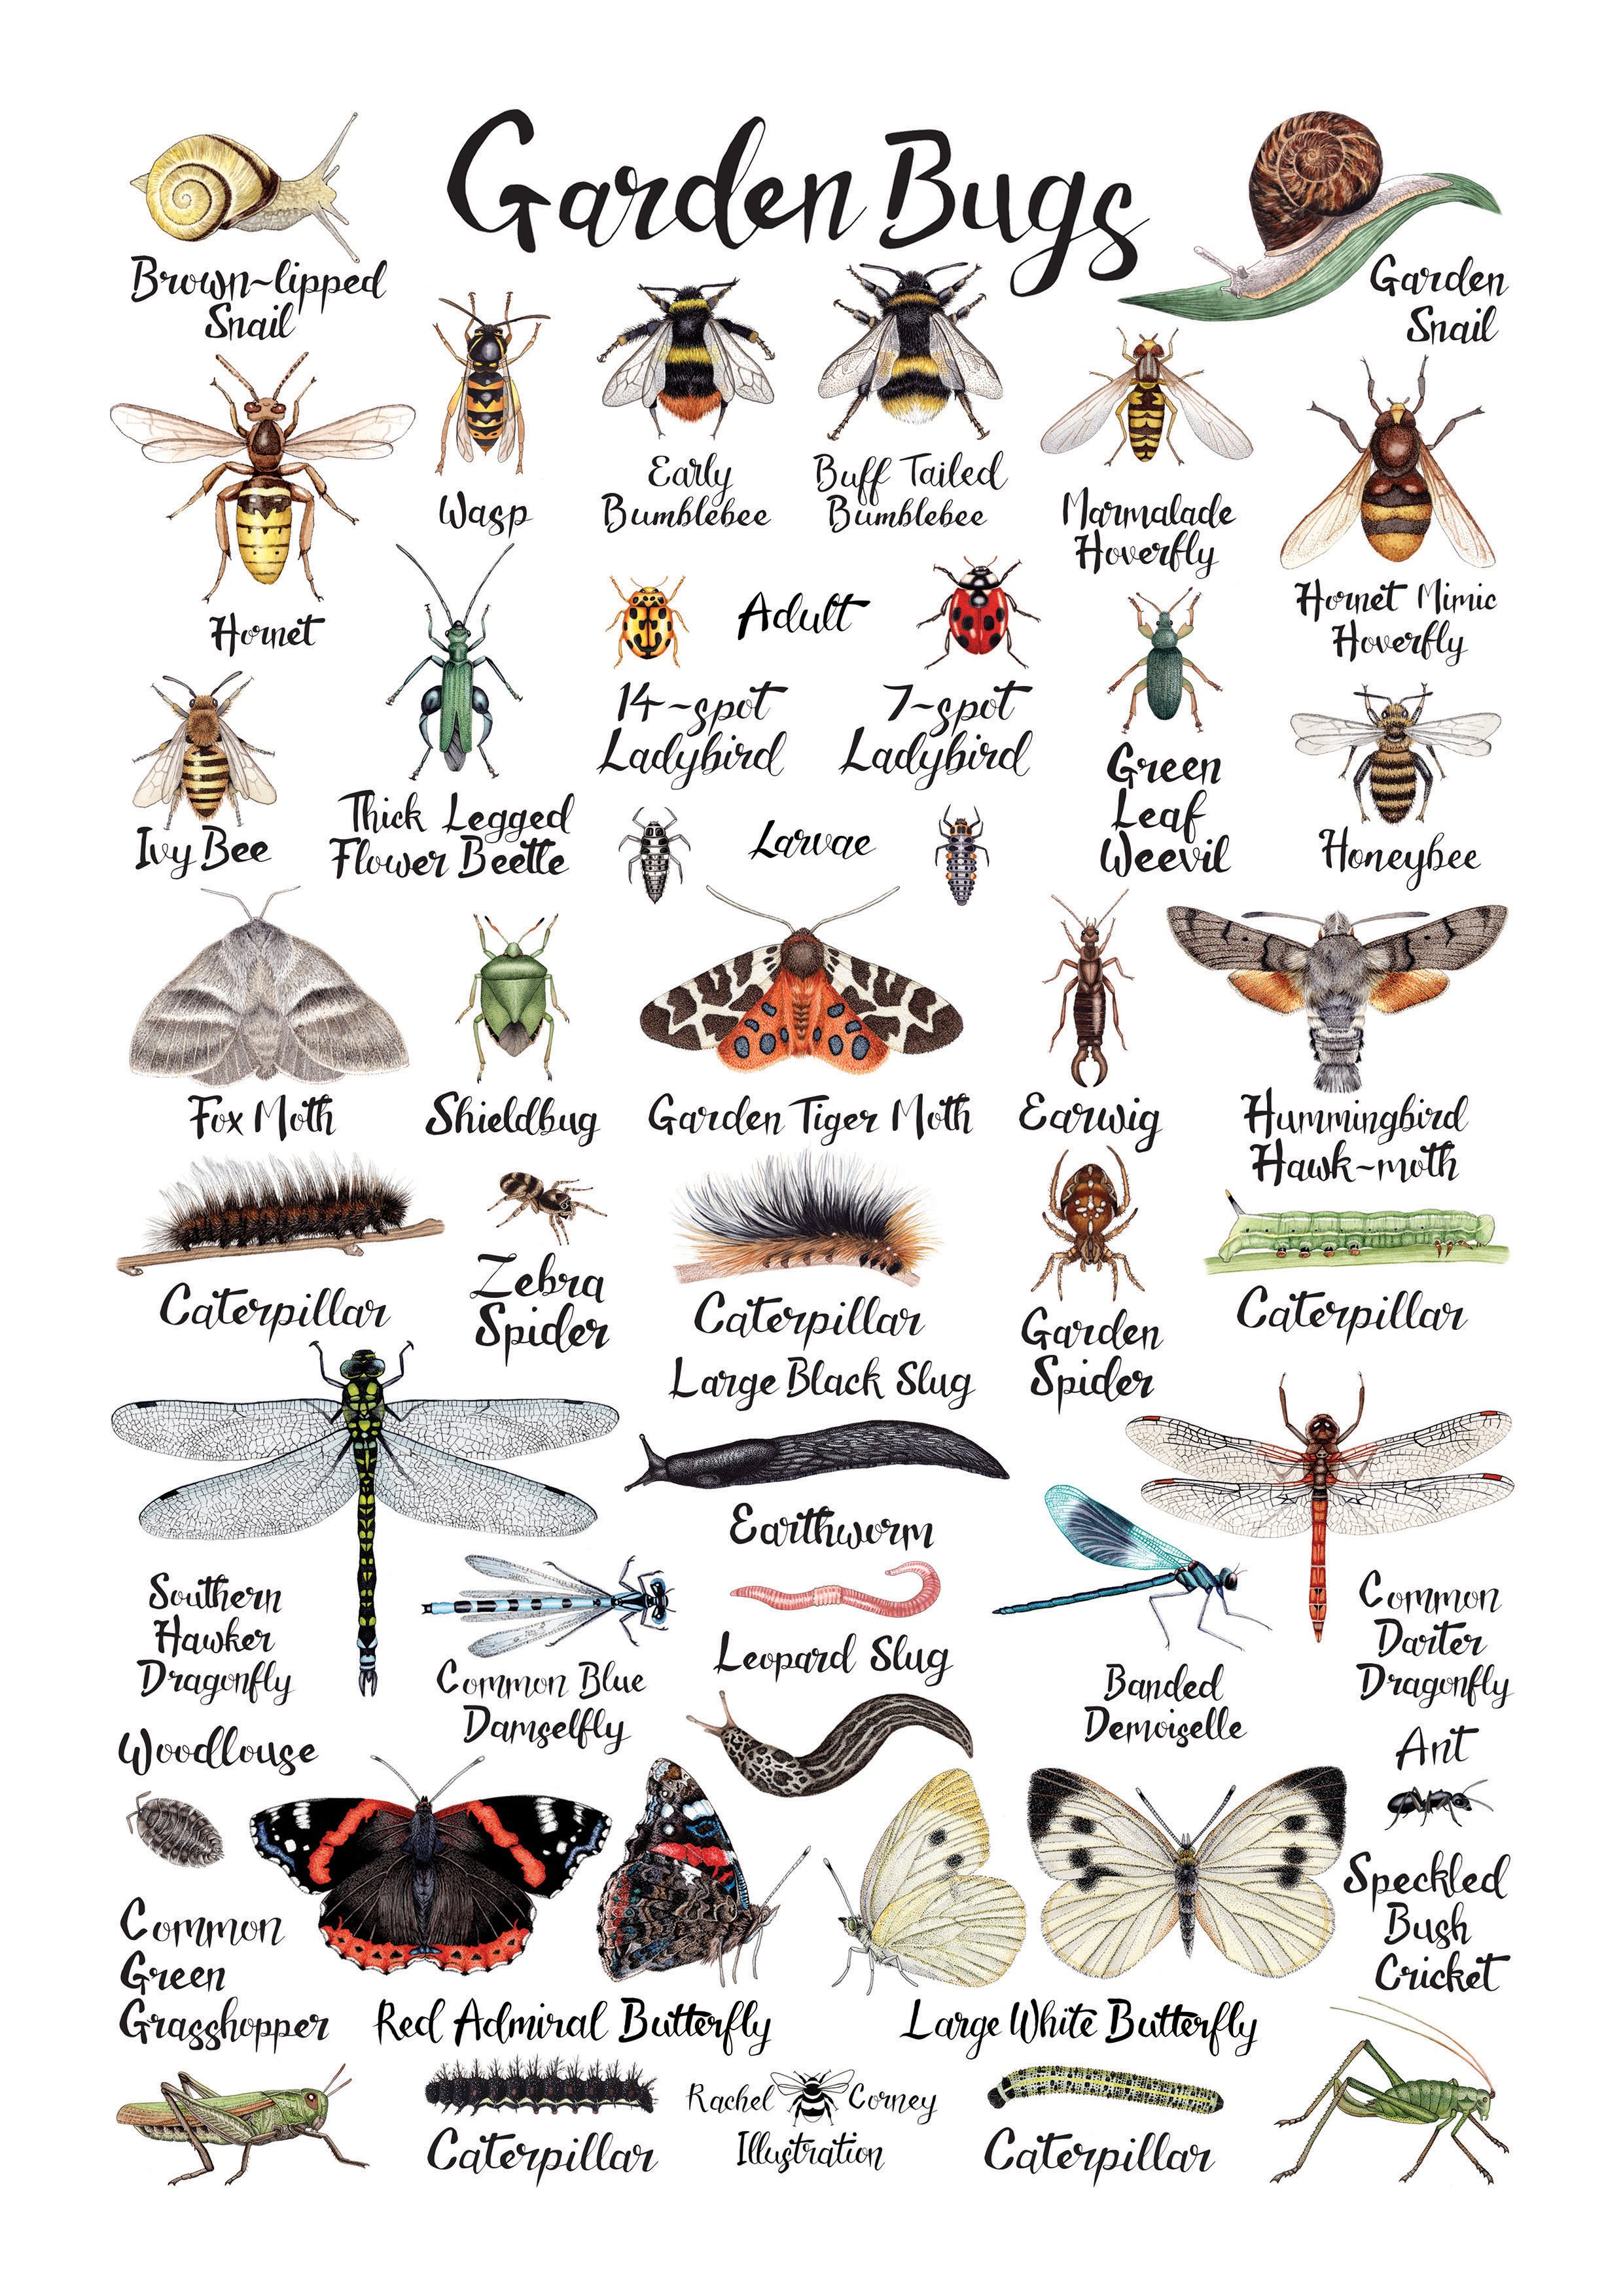 Garden Bugs Illustrated Poster — Rachel Corney Illustration